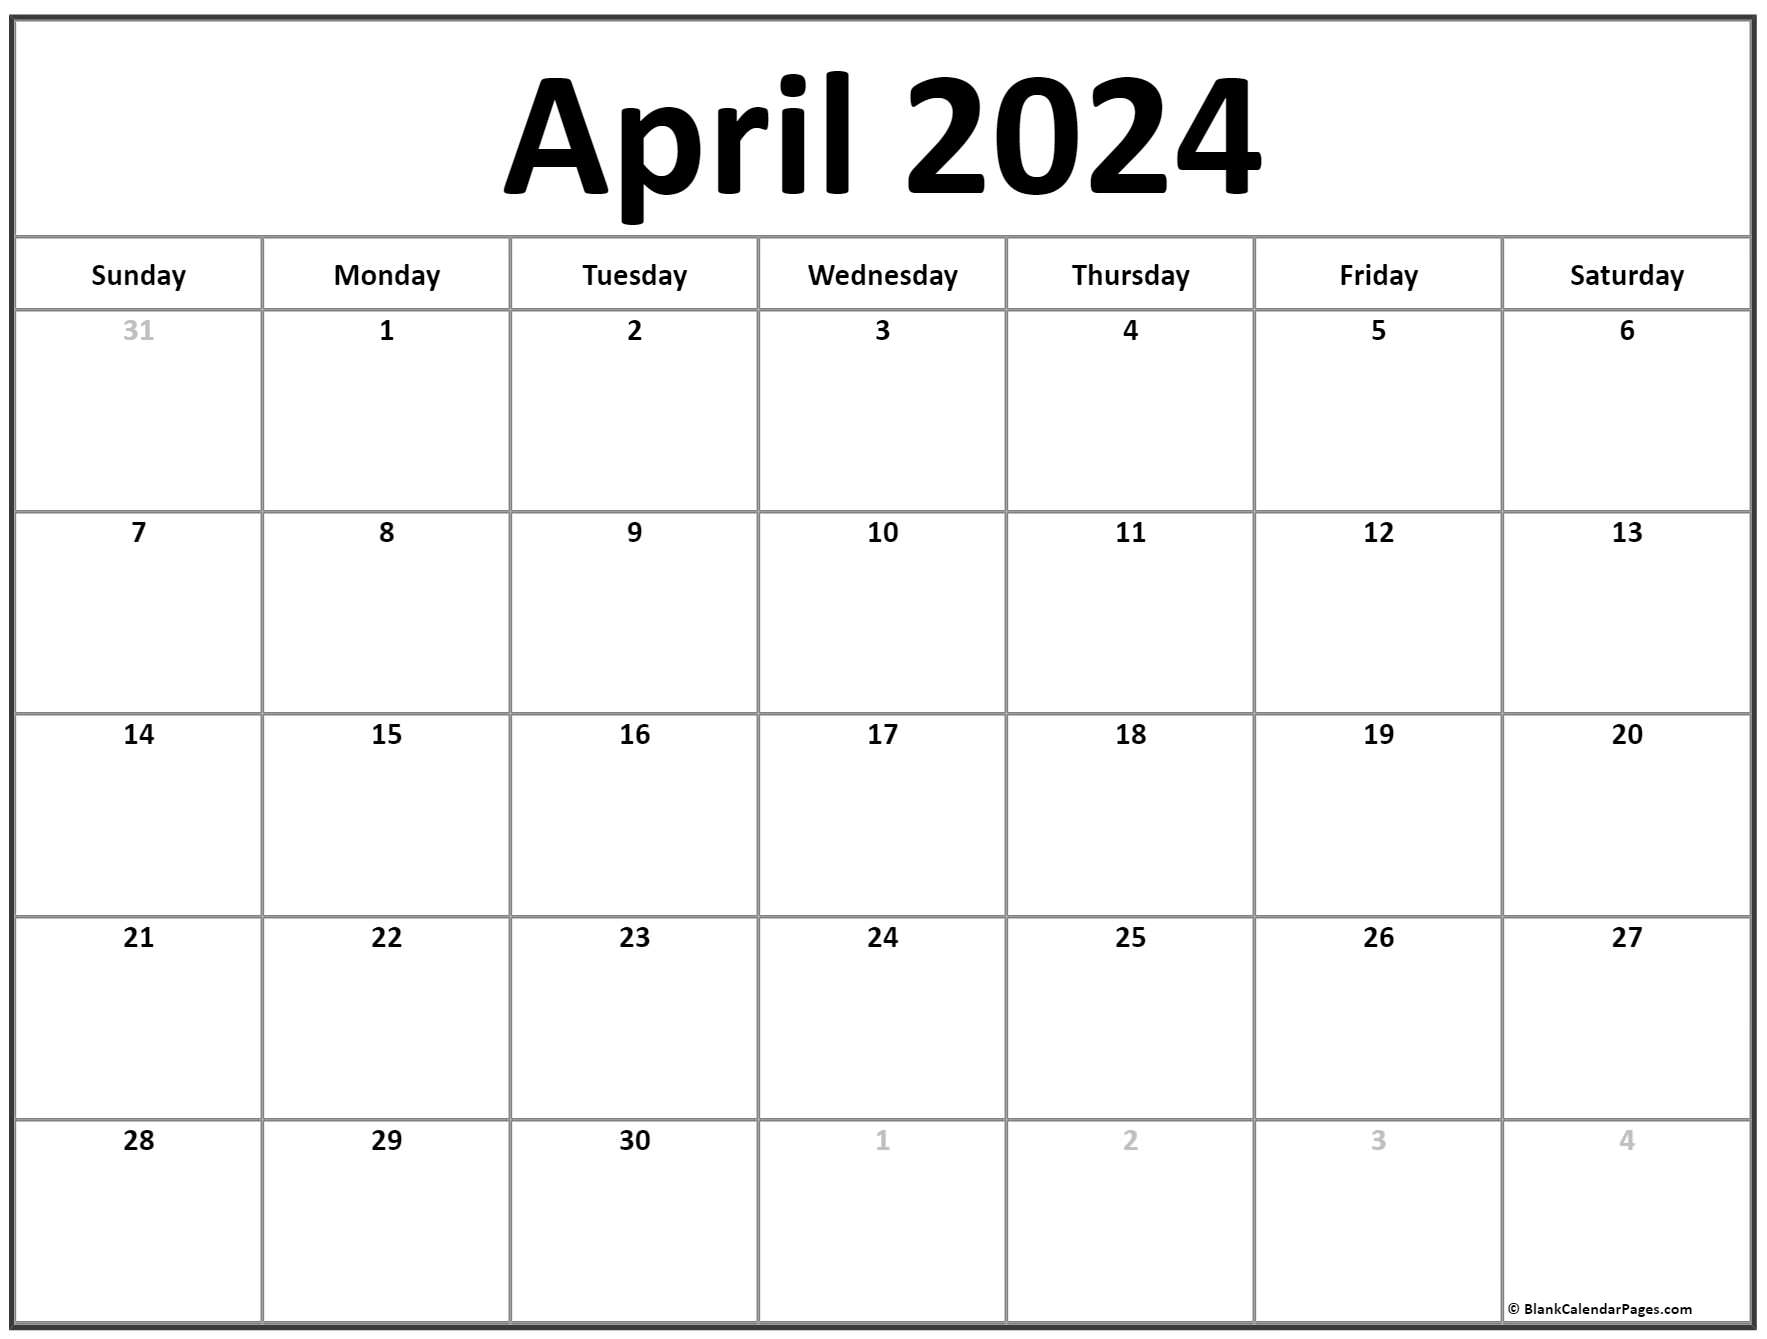 April 2022 calendar free printable calendar